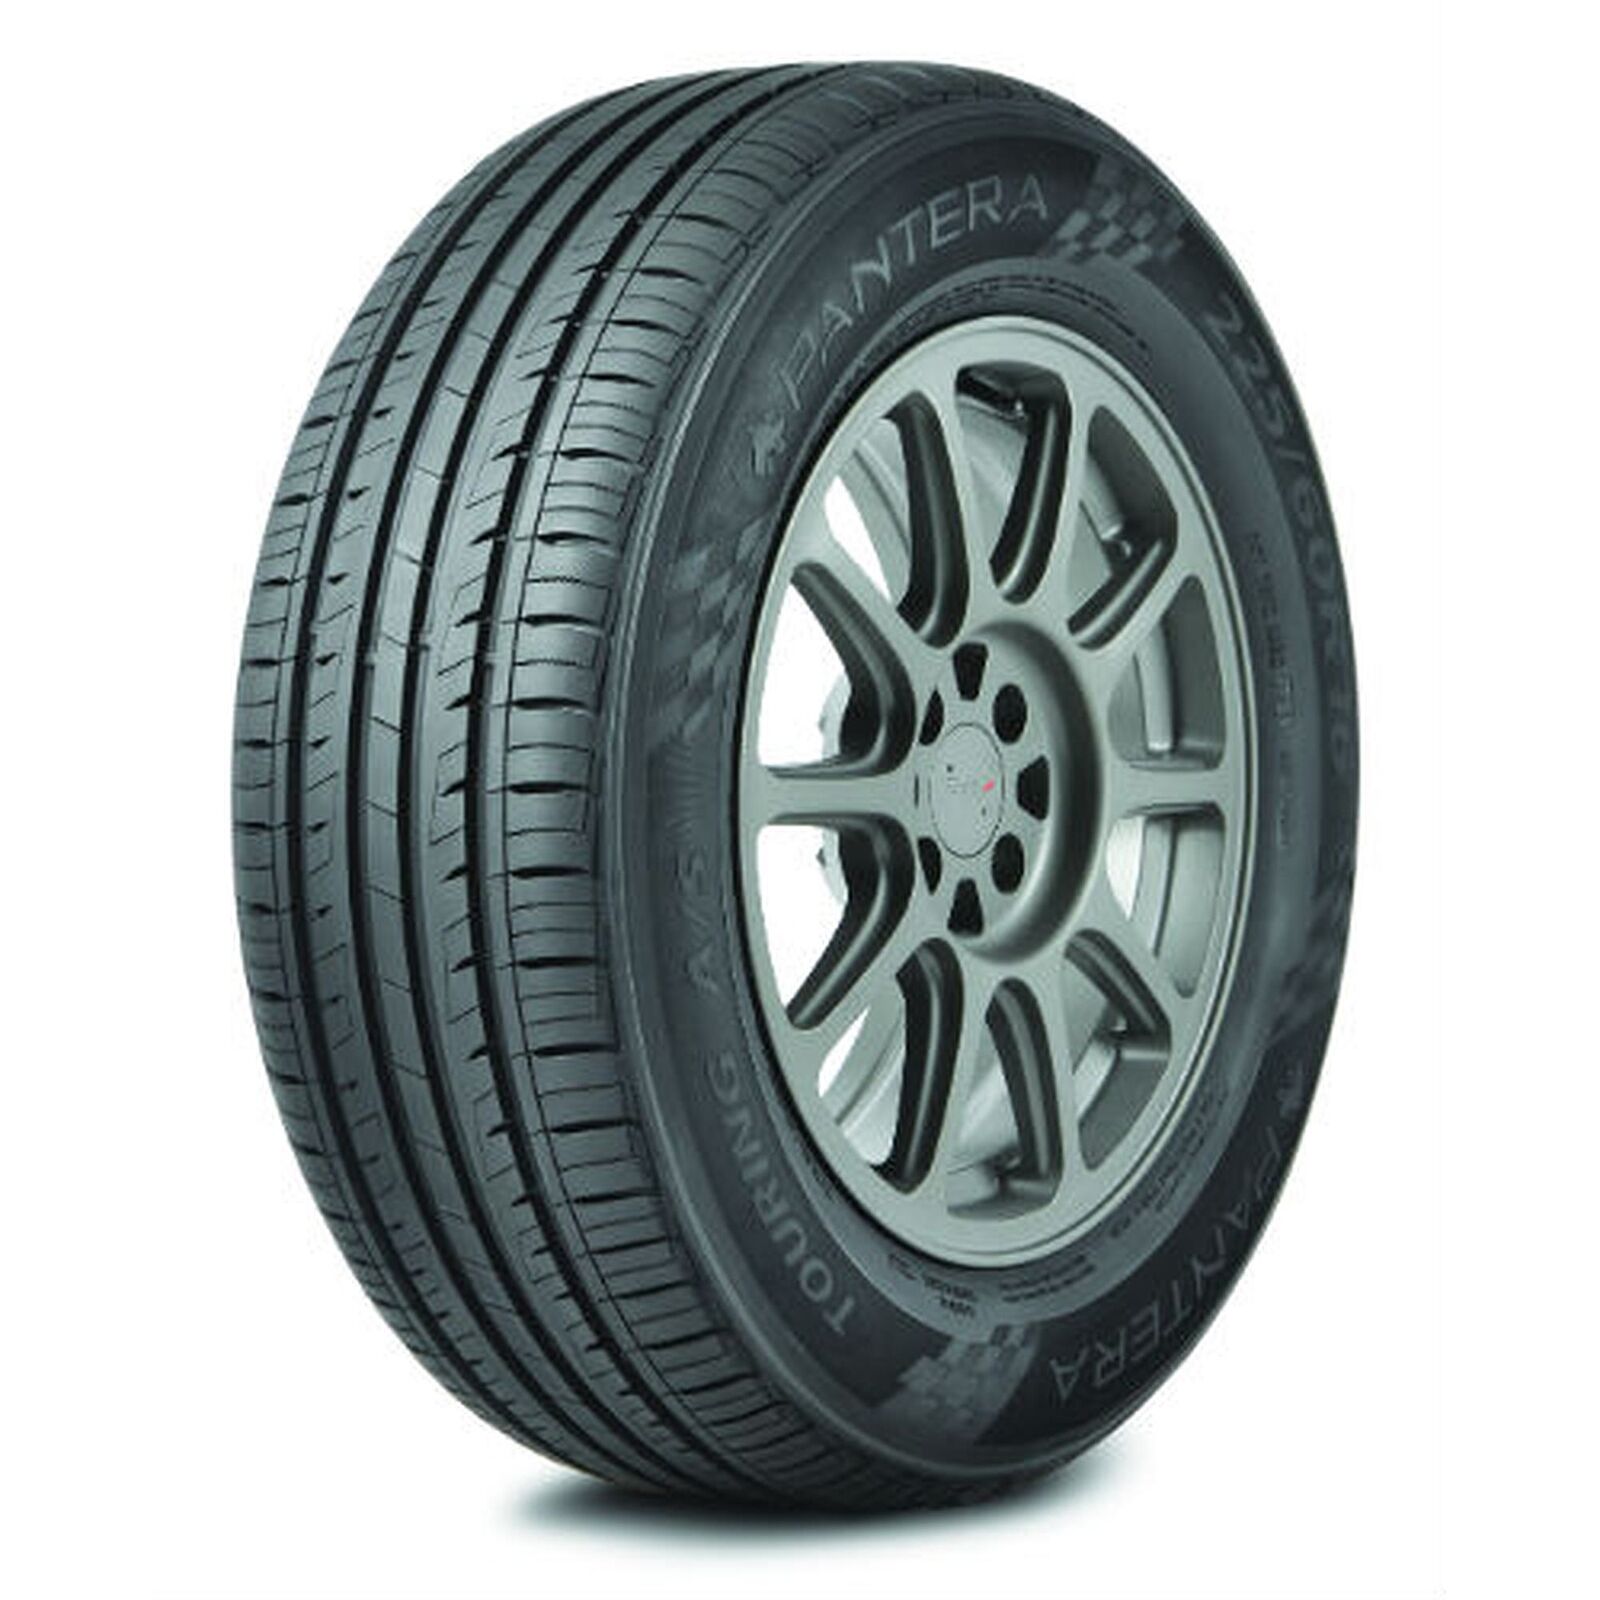 1 New Pantera Touring A/s  - P215/60r16 Tires 2156016 215 60 16